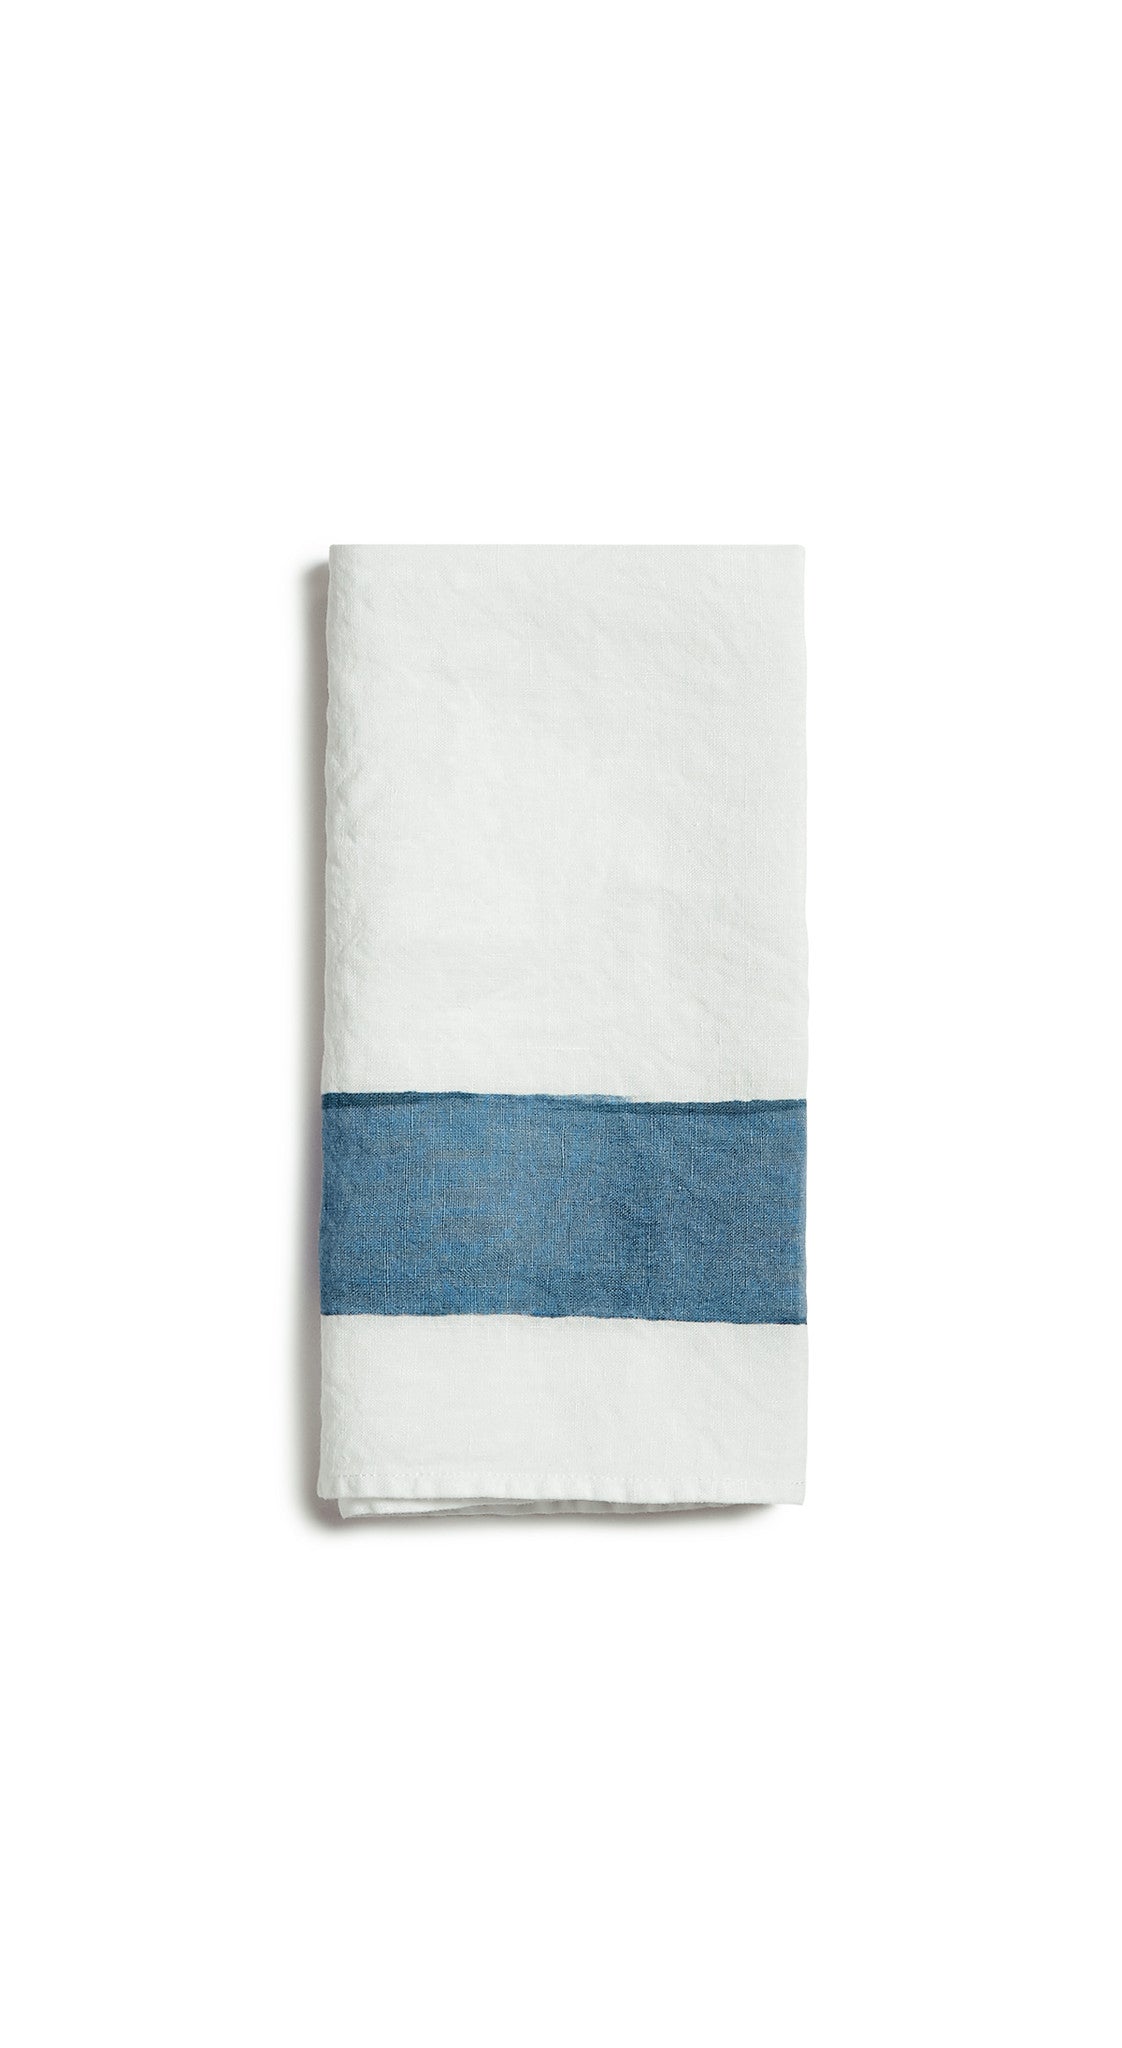 Cornice Linen Napkin in Powder Blue, 50x50cm